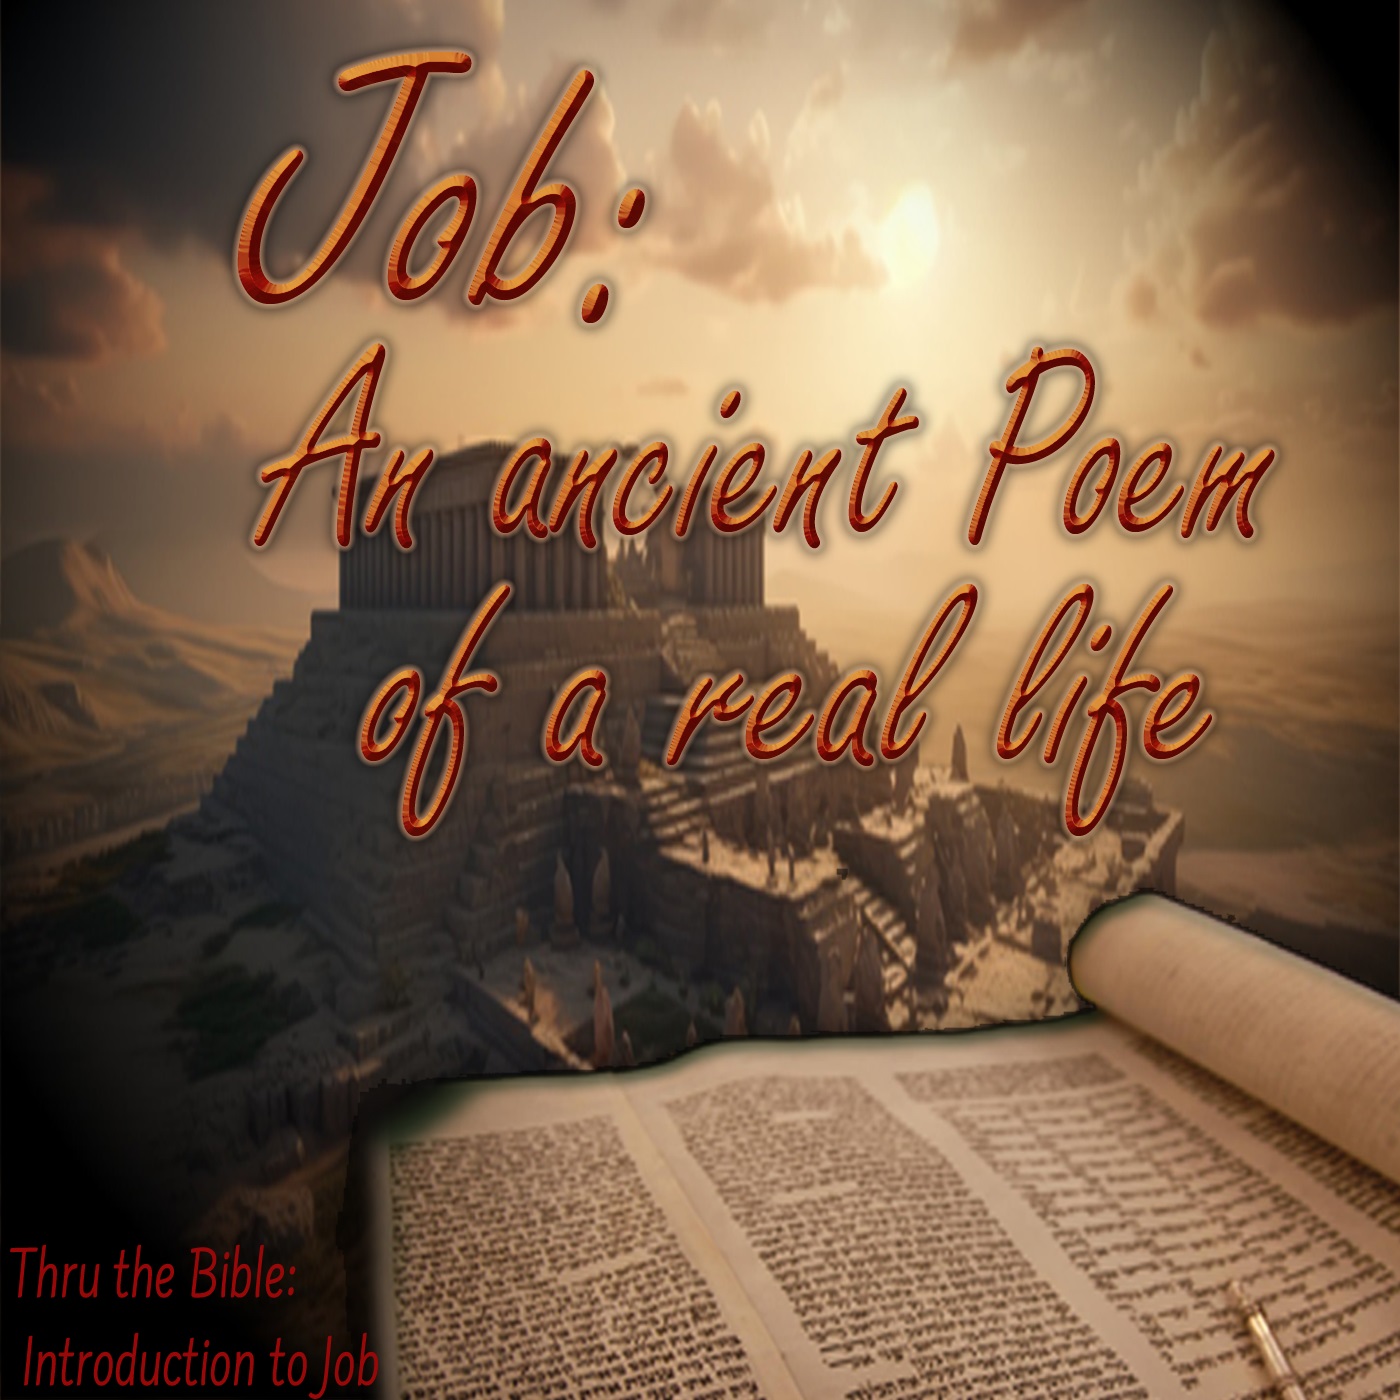 Job - An Ancient Poem of a real life - Living Grace Fellowship